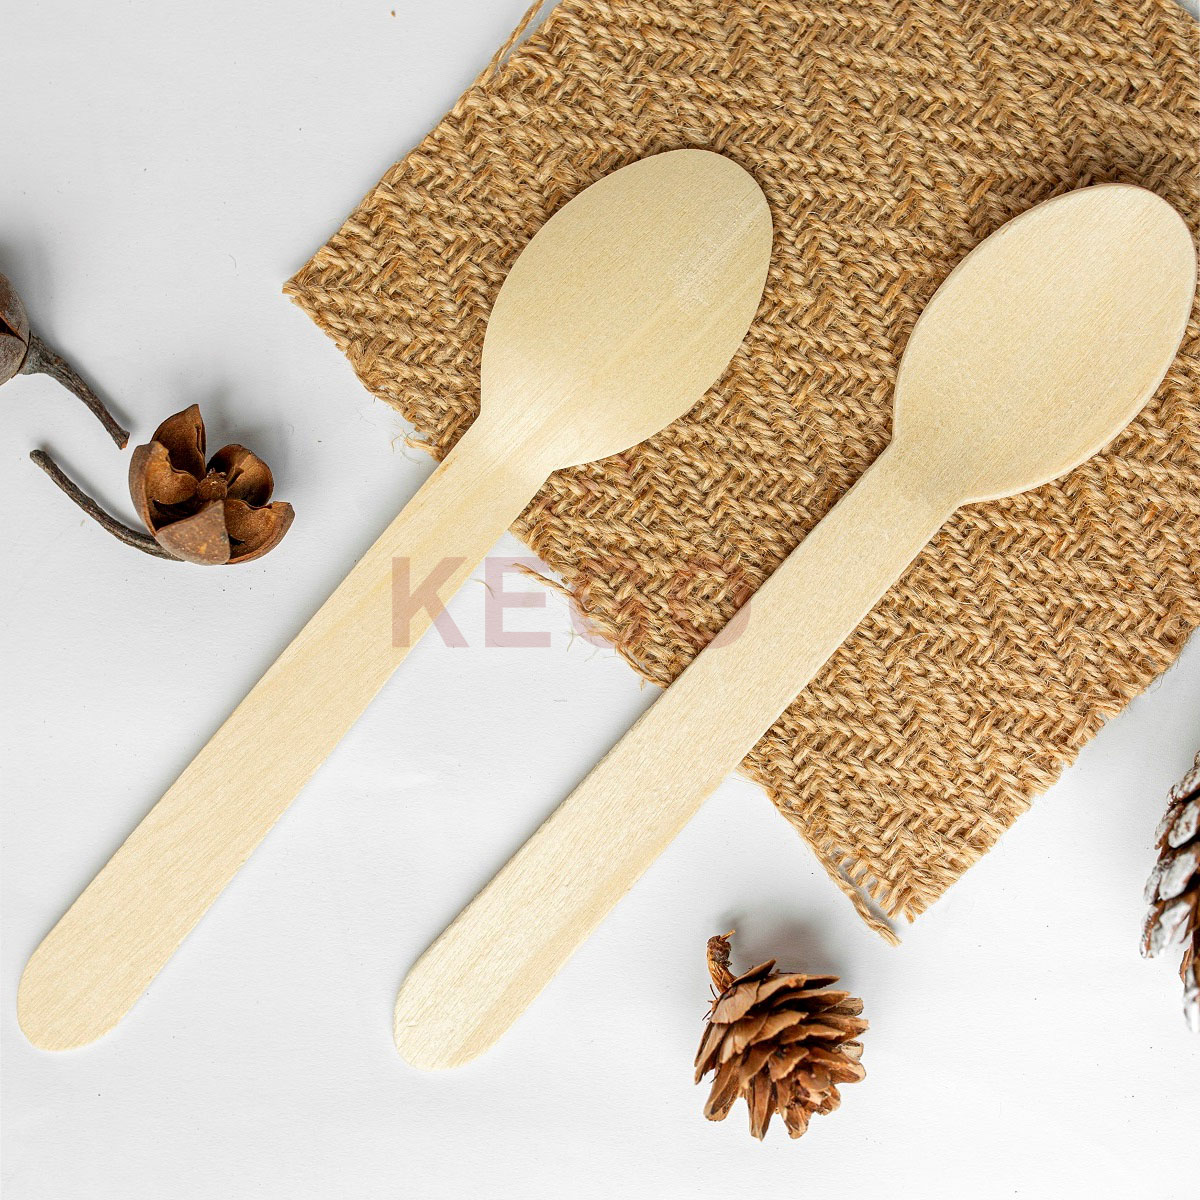 https://kego.vn/wp-content/uploads/2016/10/Disposable-Wooden-Spoon-160-1.jpg